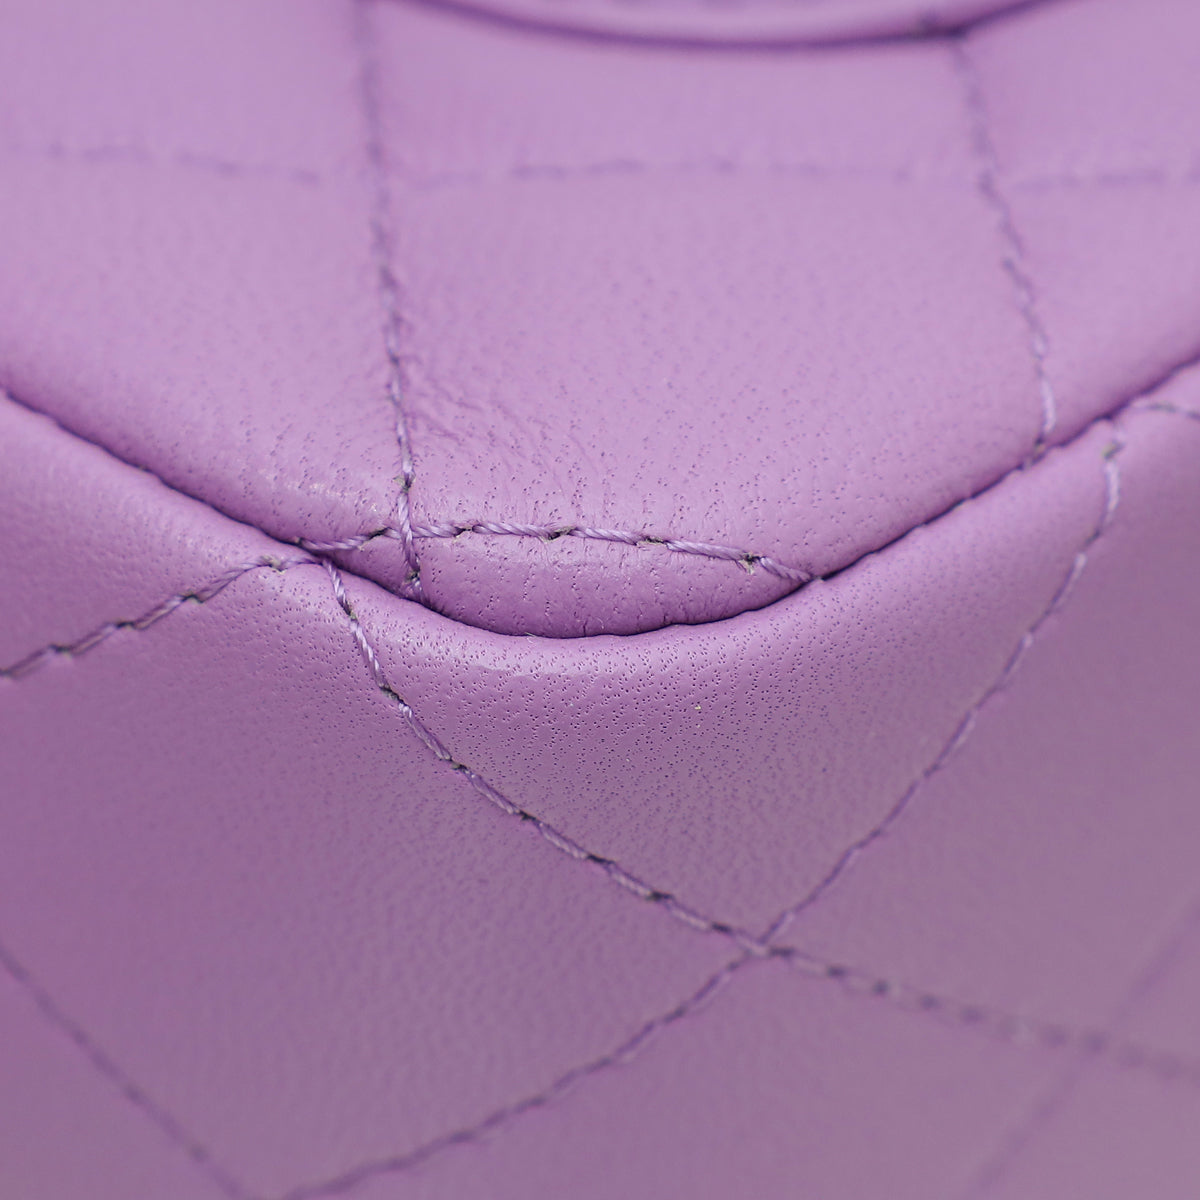 Chanel Purple CC Mini Rectangular Flap Bag